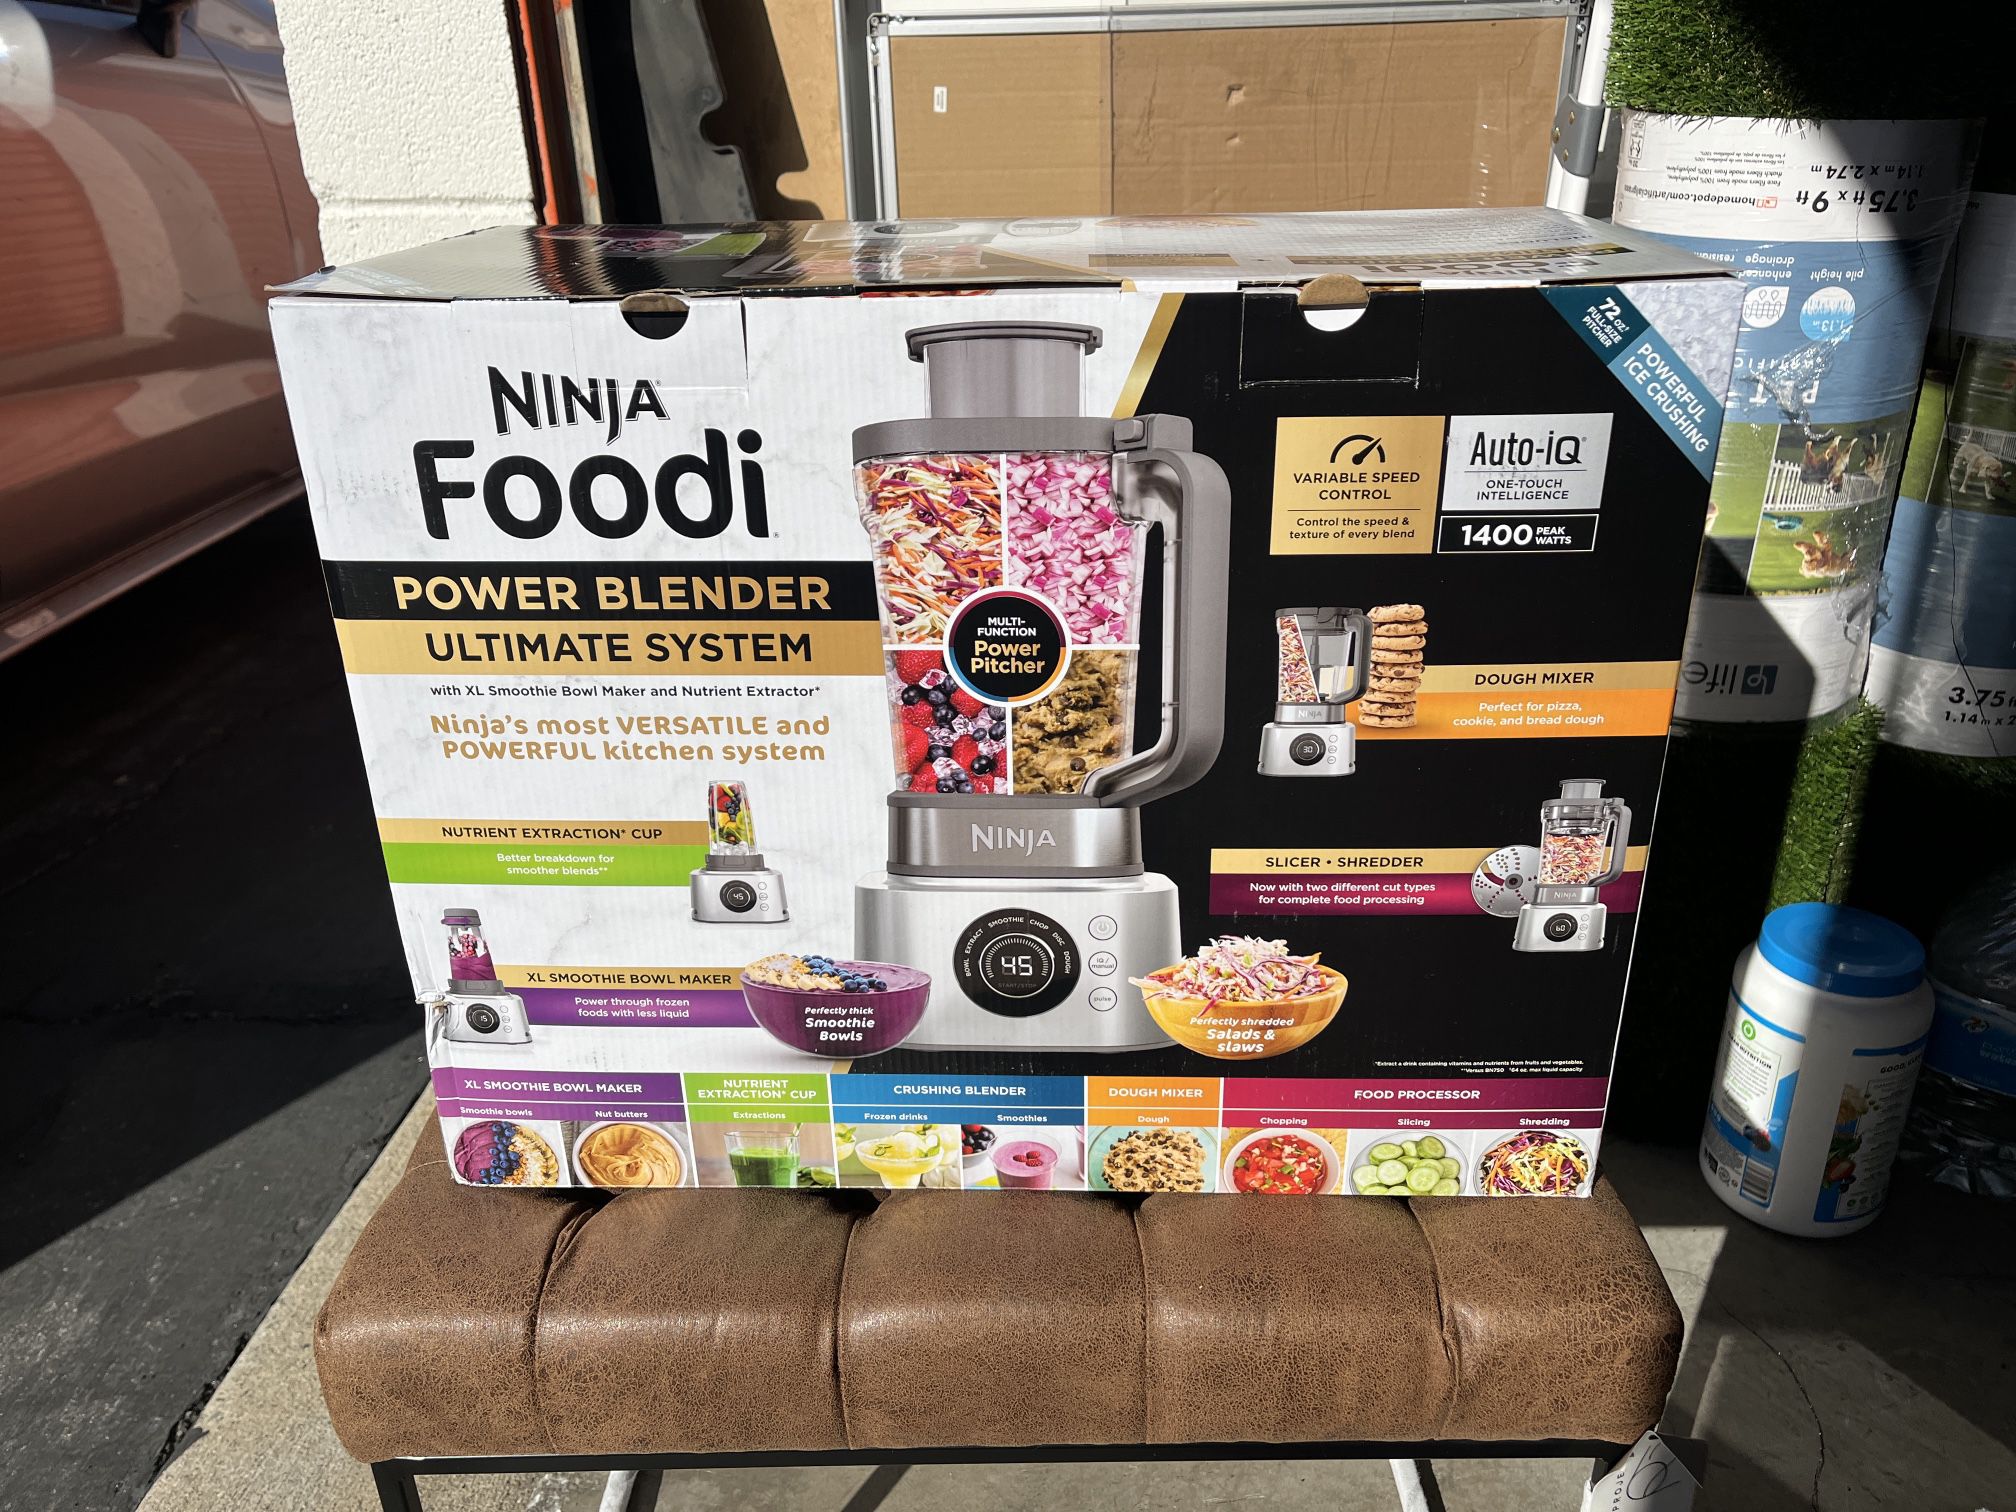 NINJA FOODI POWER MIXER SYSTEM . for Sale in Rialto, CA - OfferUp